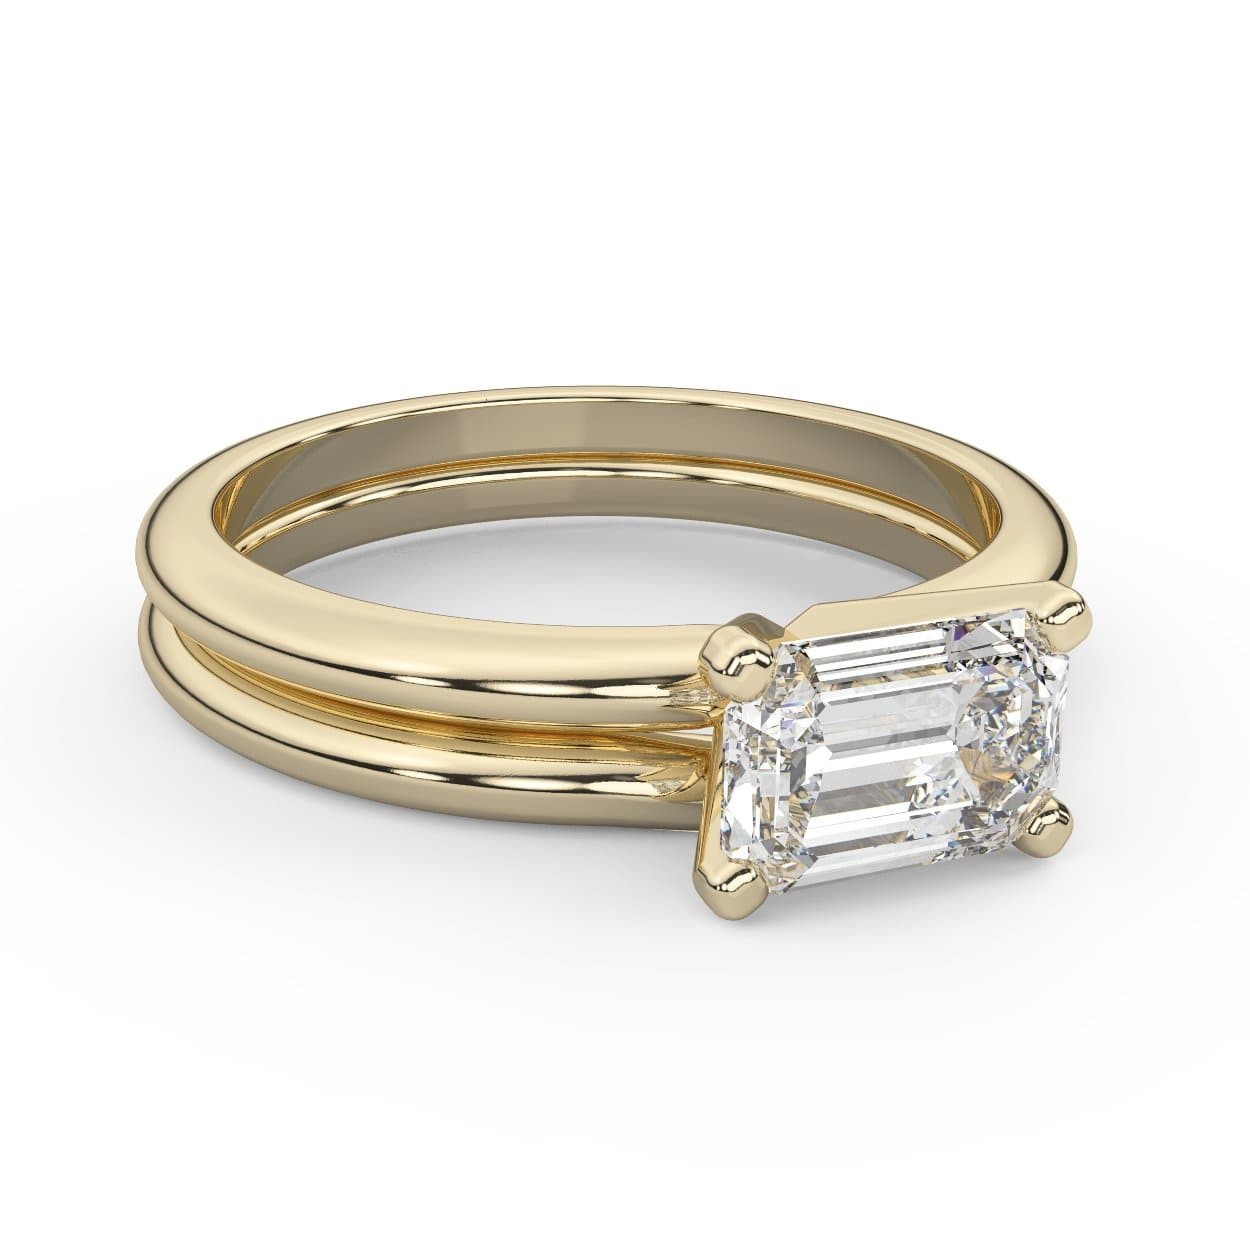 East West Emerald Cut Diamond Wedding Set in 14k Gold